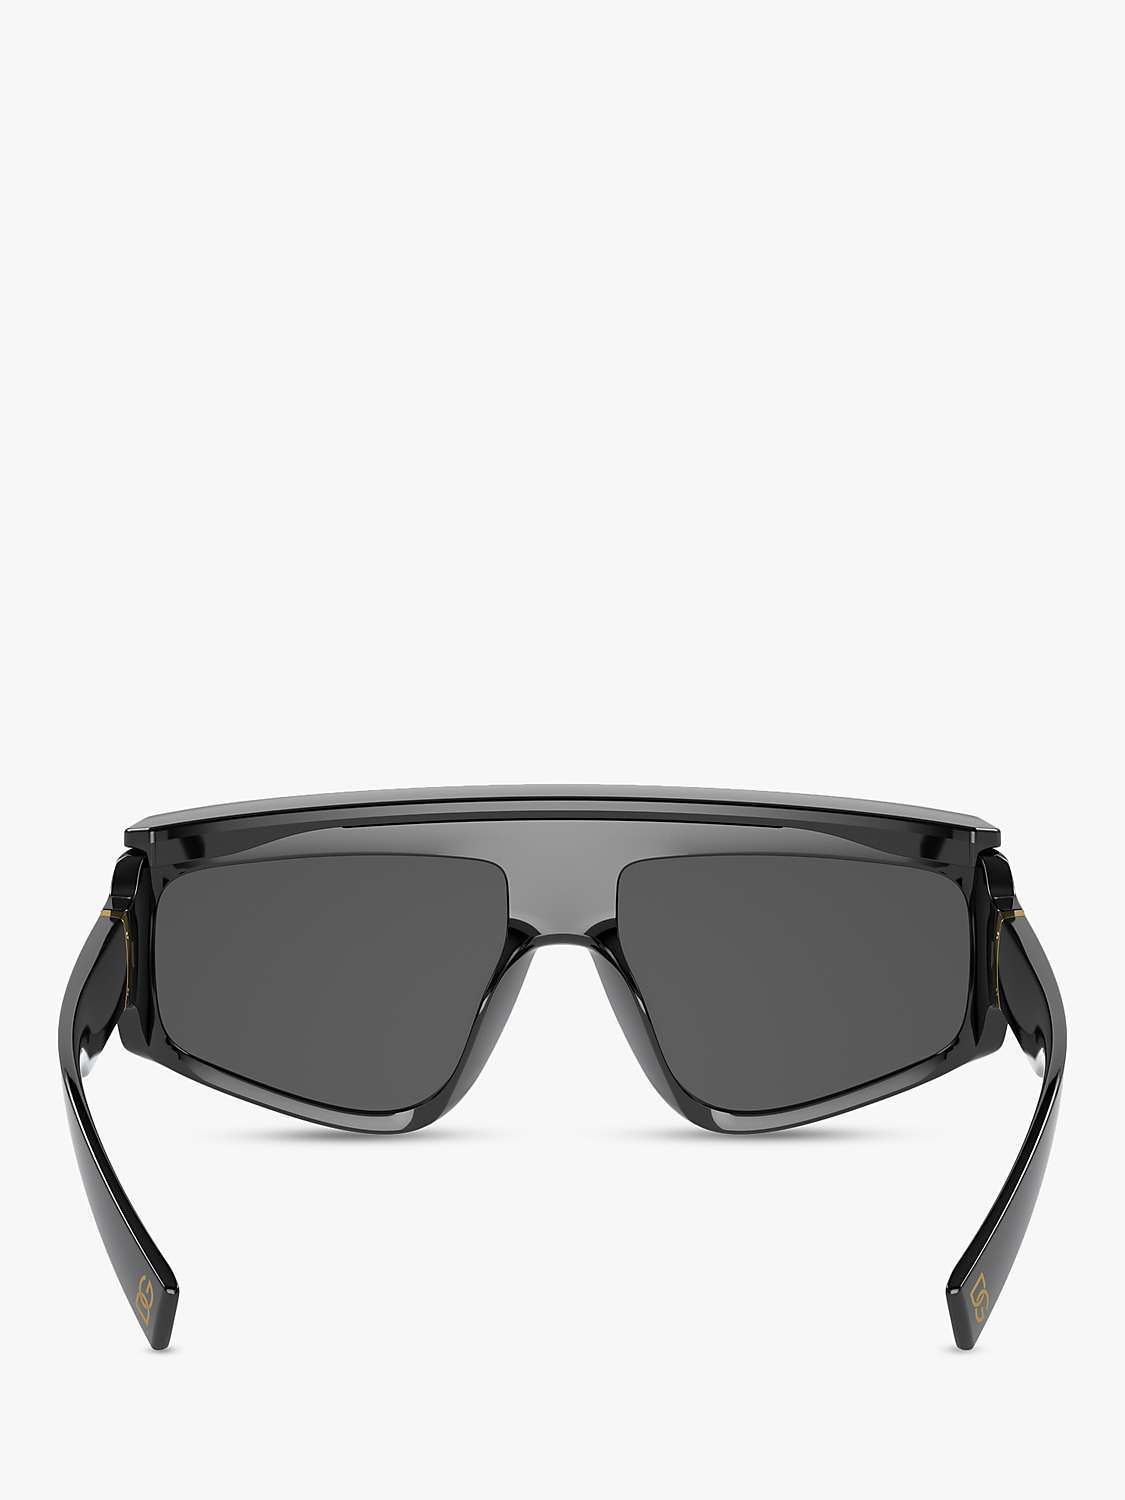 Buy Dolce & Gabbana DG6177 Men's Rectangular Sunglasses Online at johnlewis.com